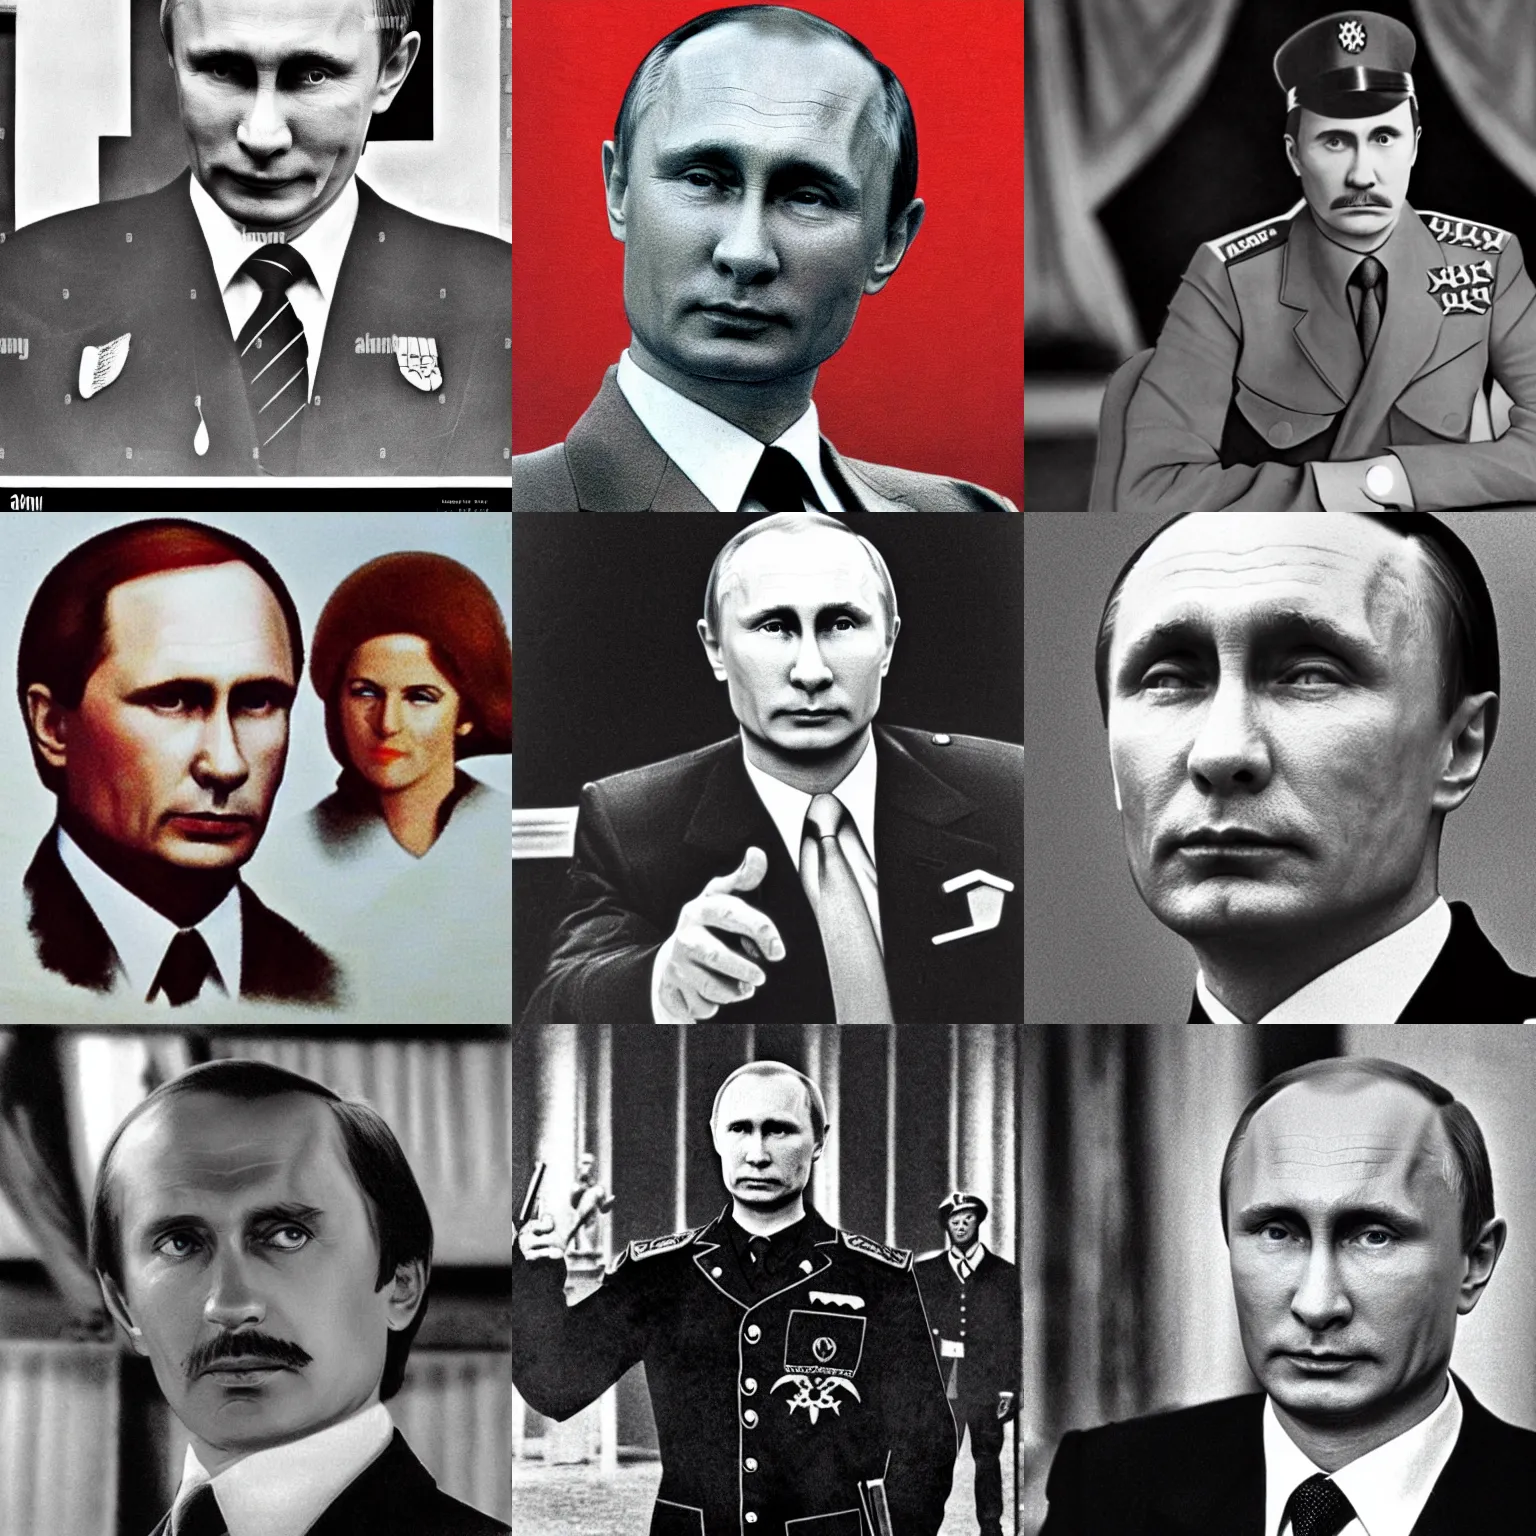 Prompt: portrait of vladimir putin as german nsdap chief from black white soviet 7 0 s tv show